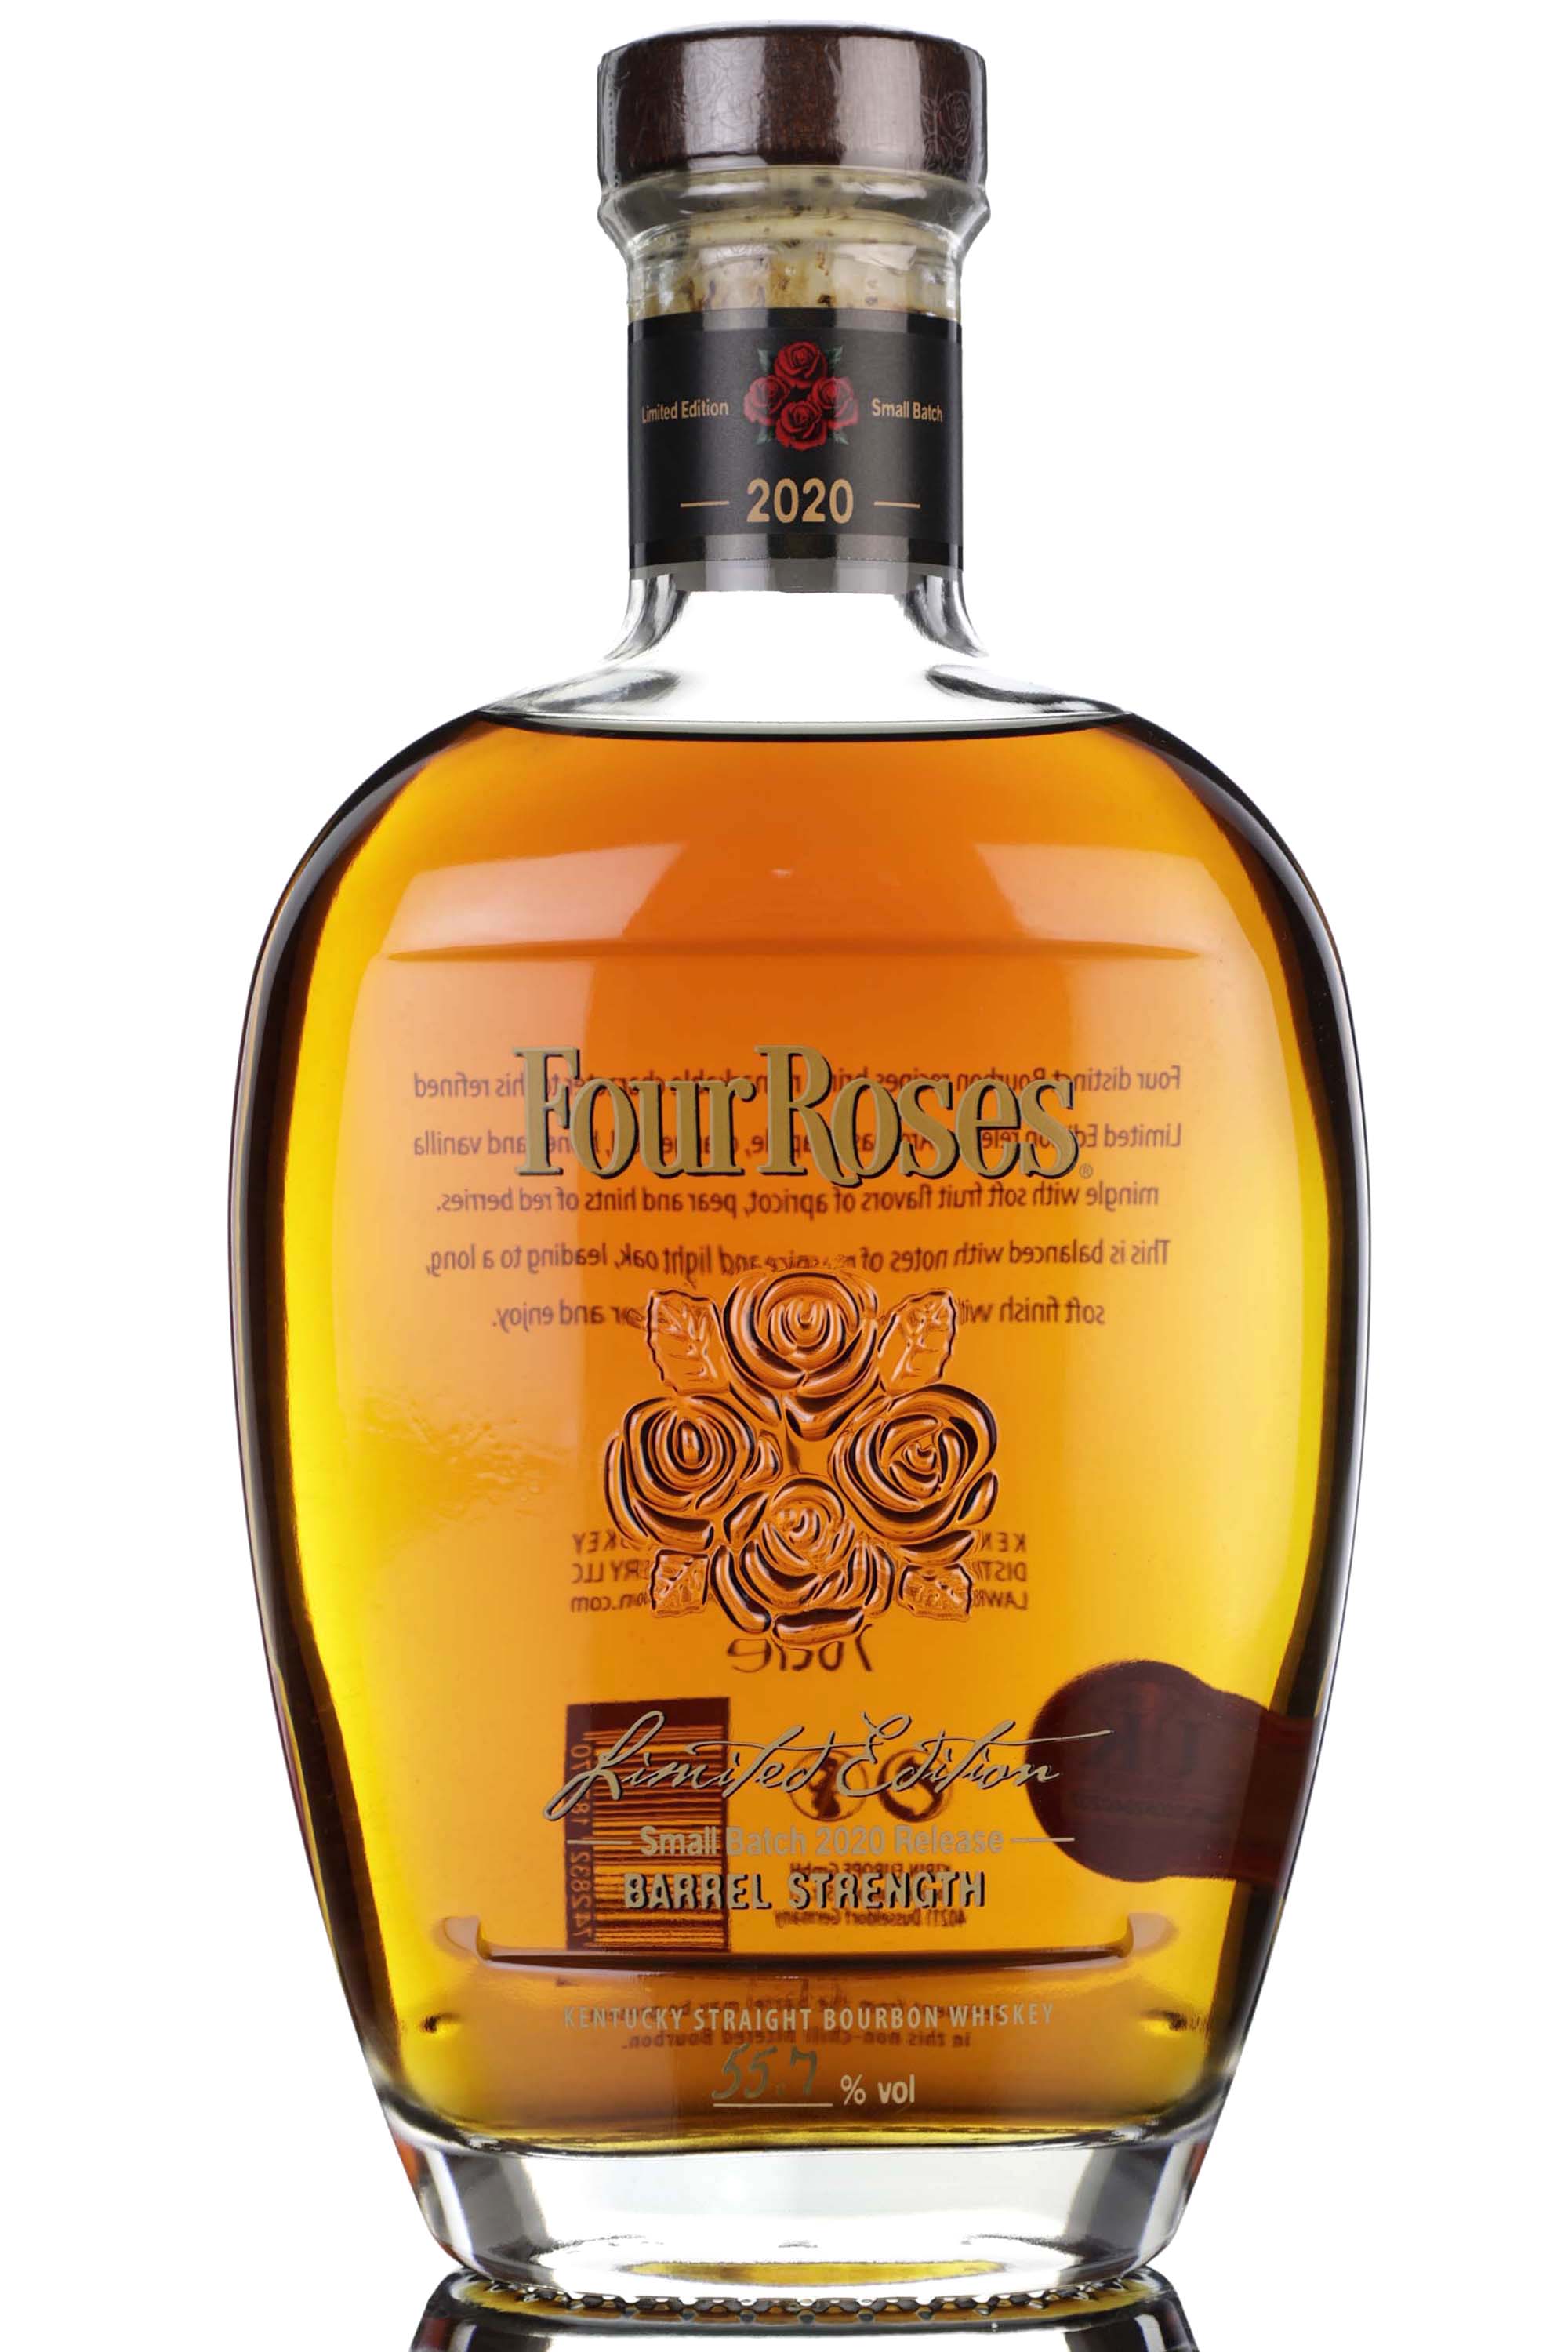 Four Roses Barrel Strength Bourbon - Small Batch - 2020 Release